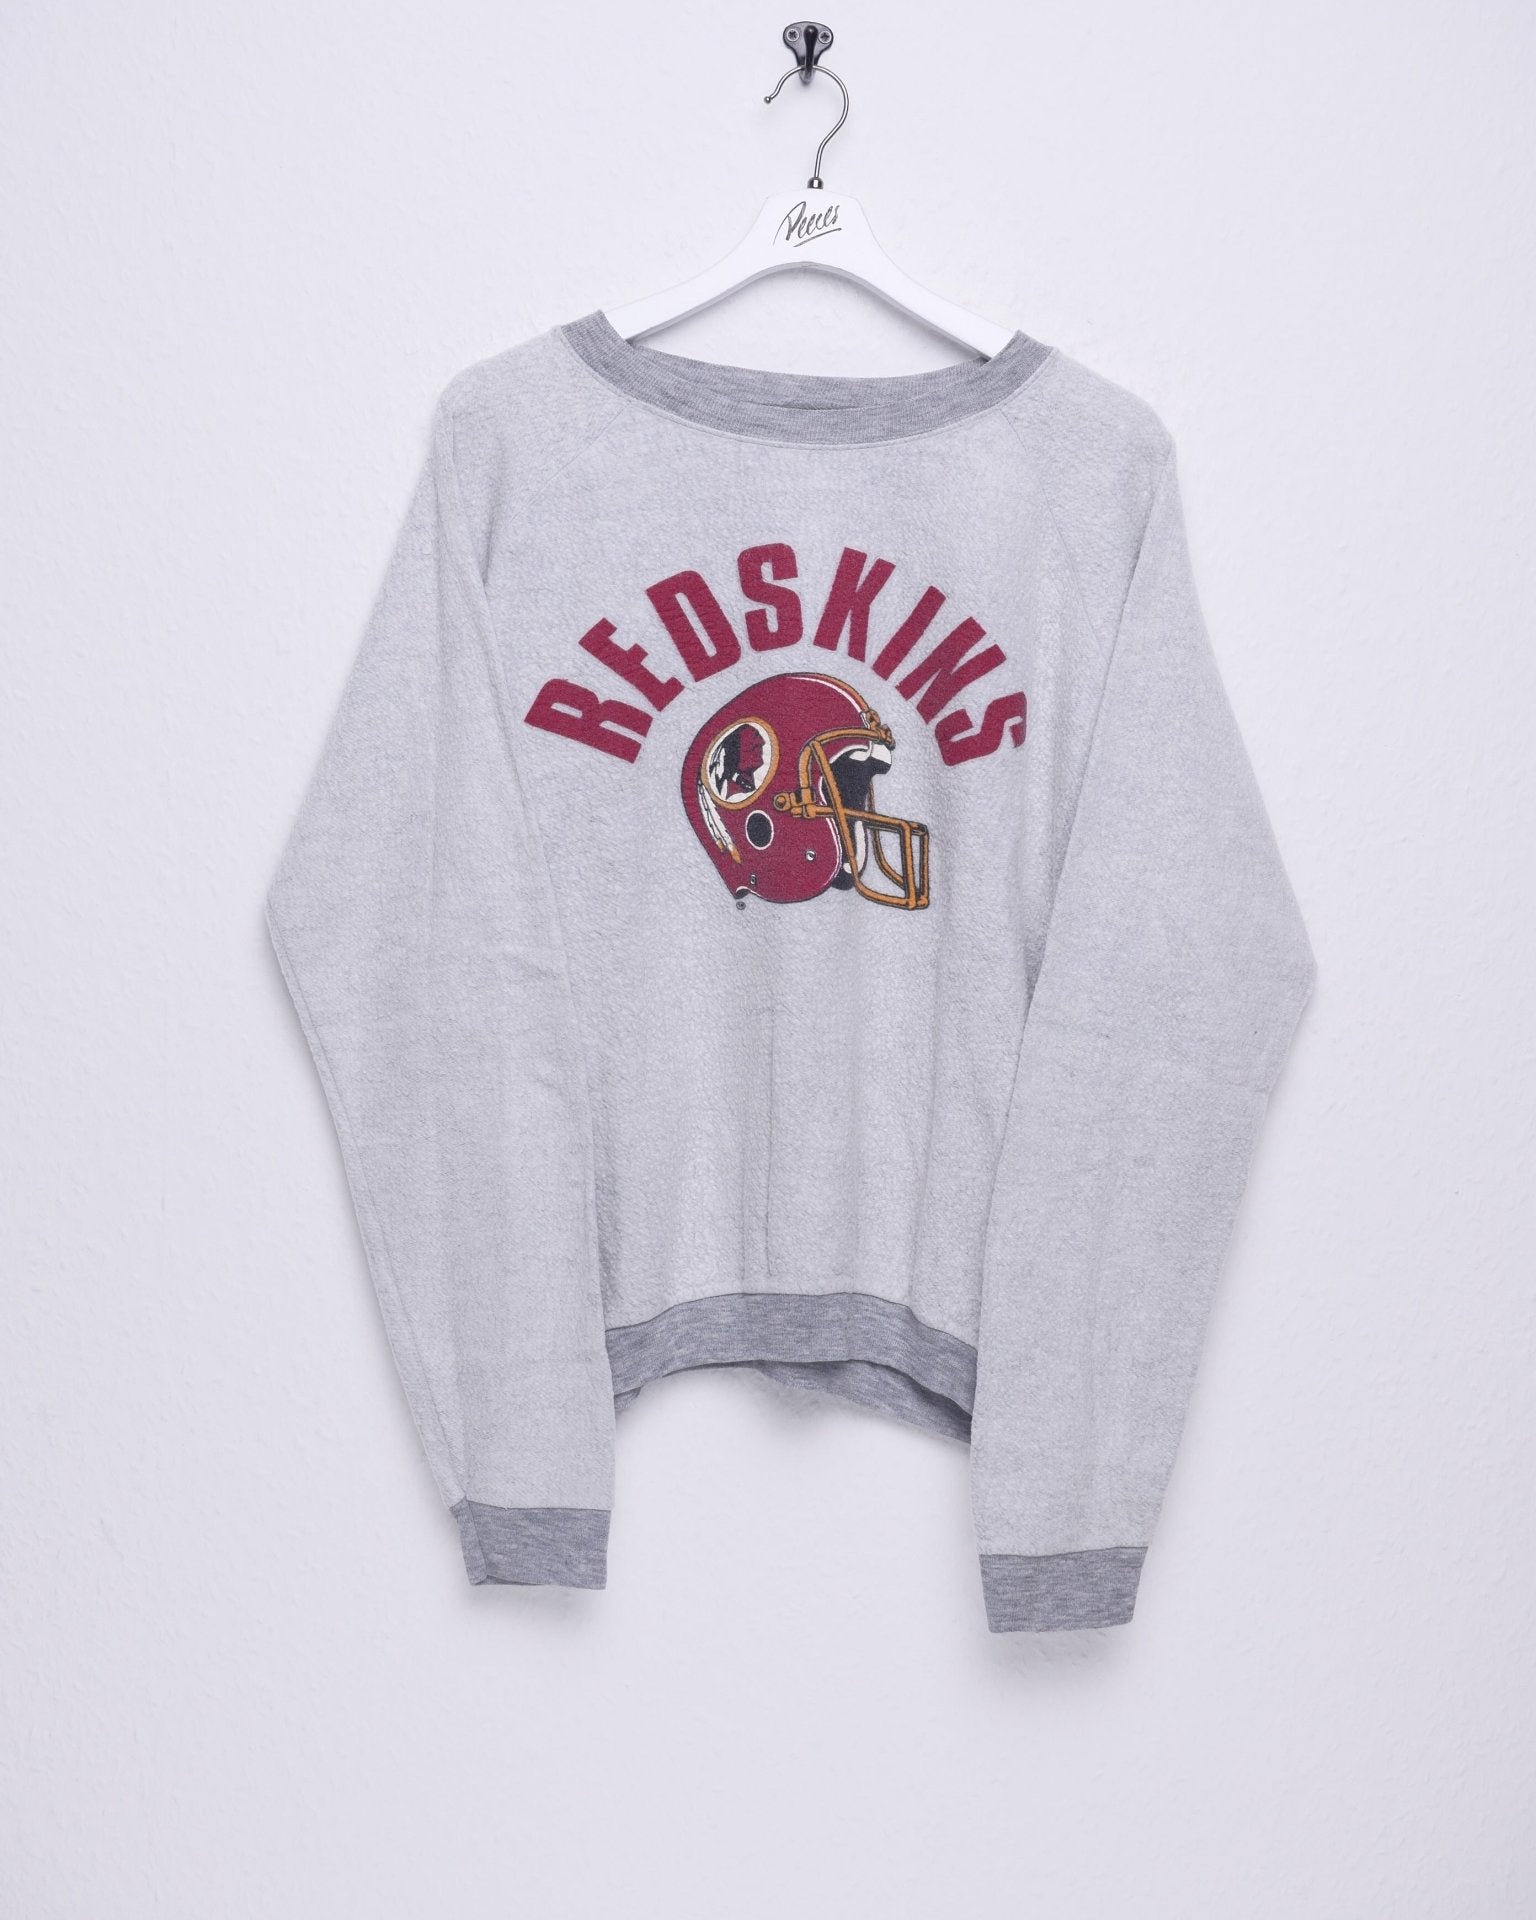 nfl Washington Redskins printed Logo Sweater - Peeces